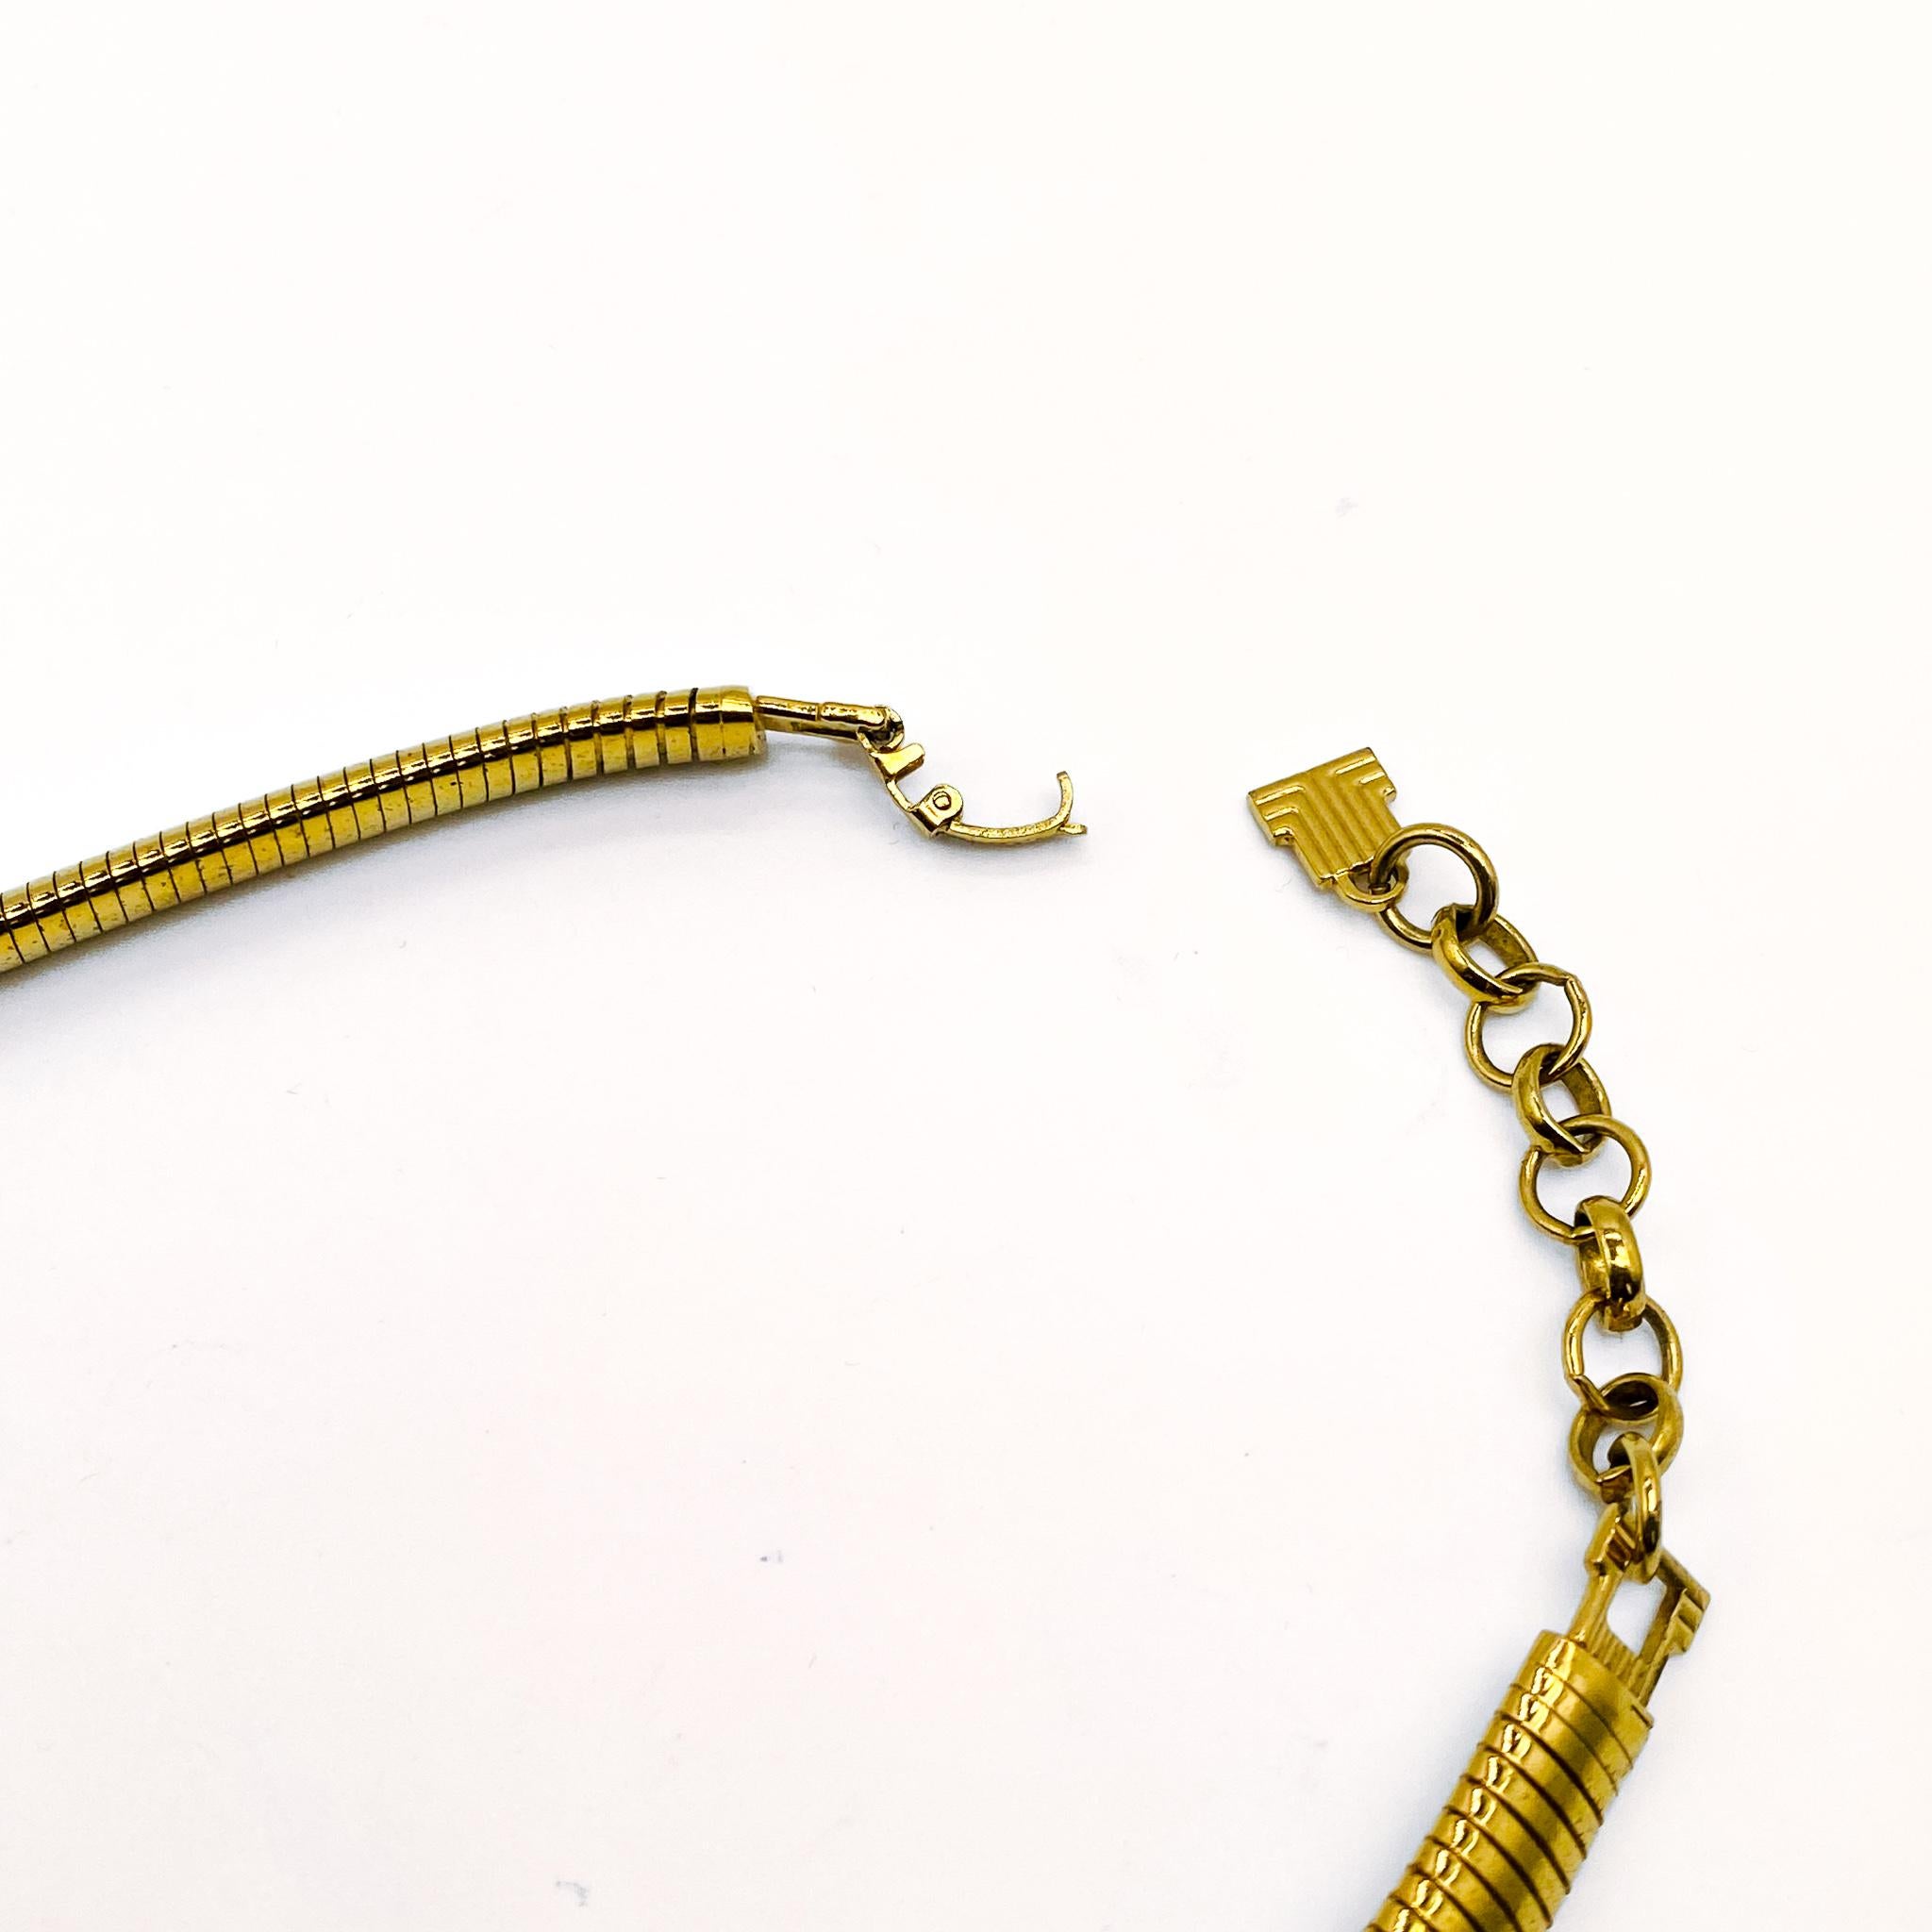 lanvin necklace vintage